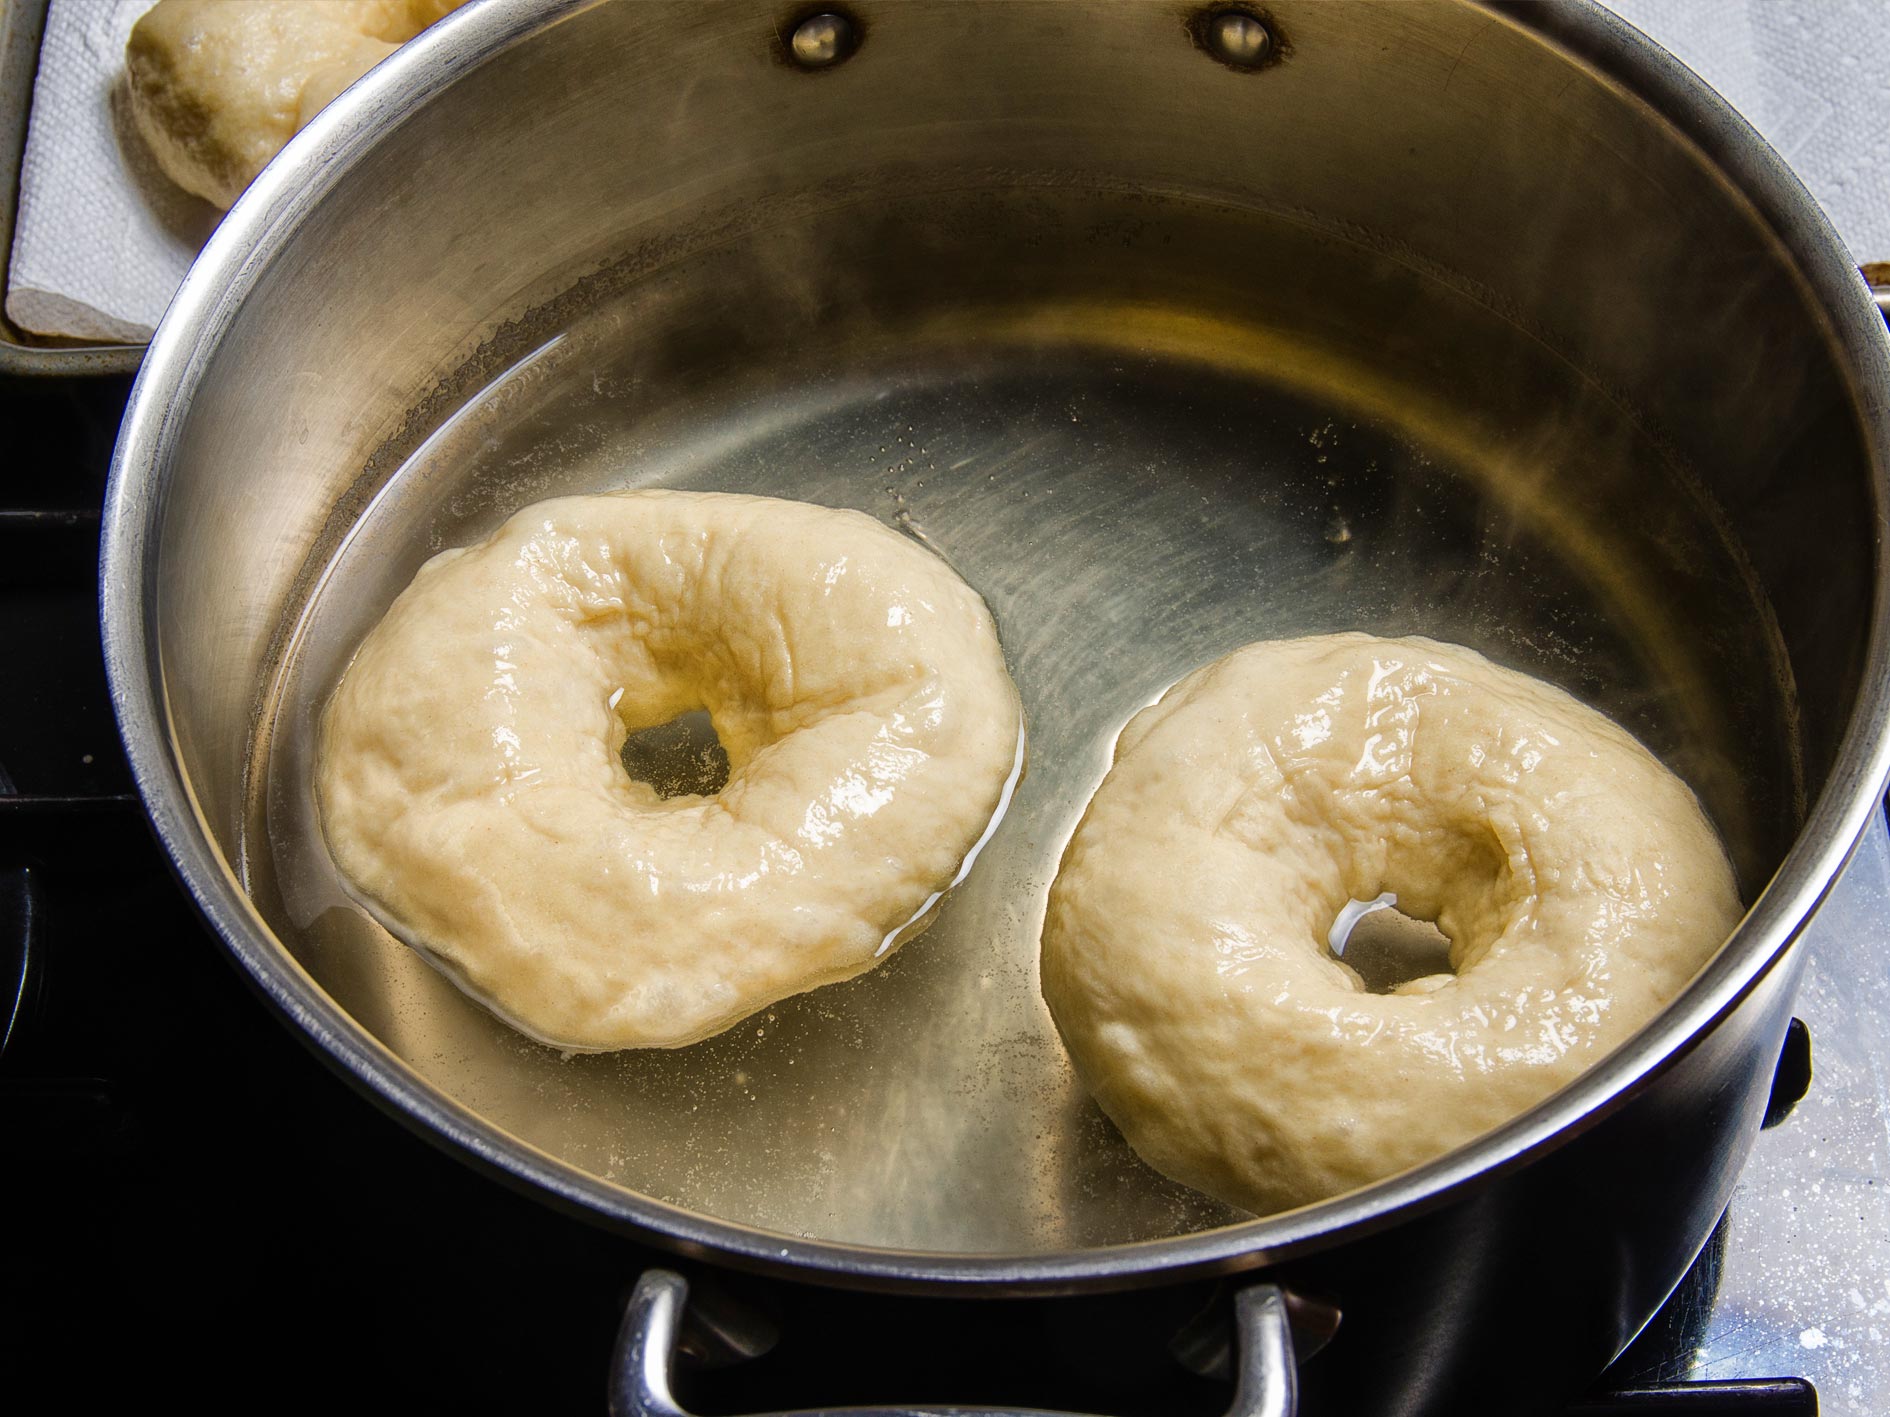 Kook de New York bagels 1,5 minuur per kant in kokend water